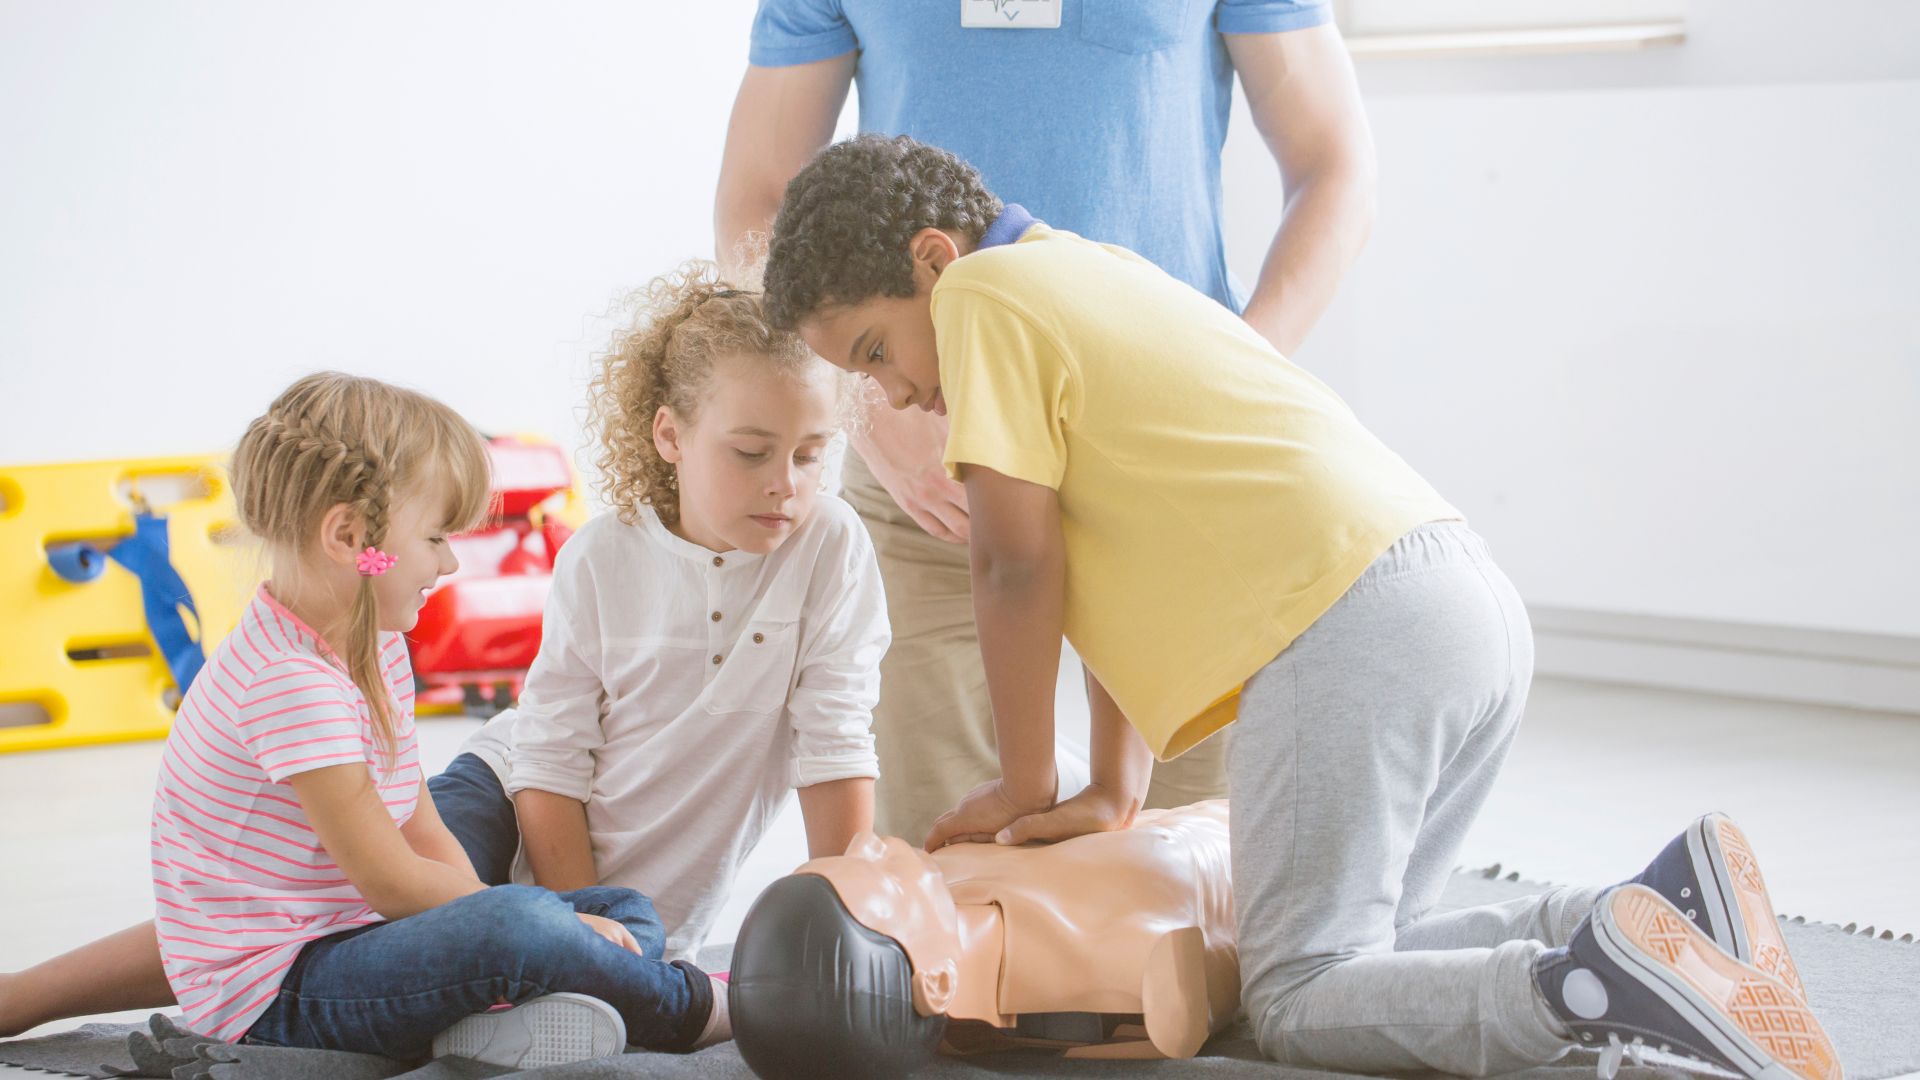 When Should Kids Start Learning CPR?